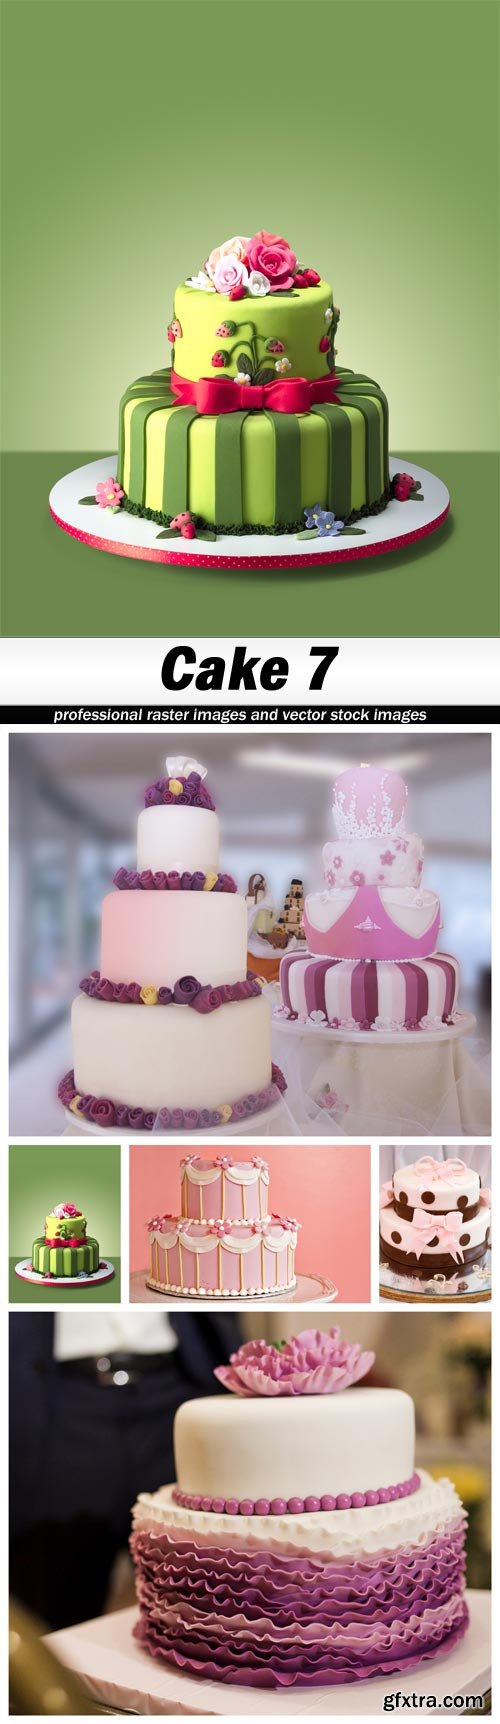 Cake 7 - 5 UHQ JPEG